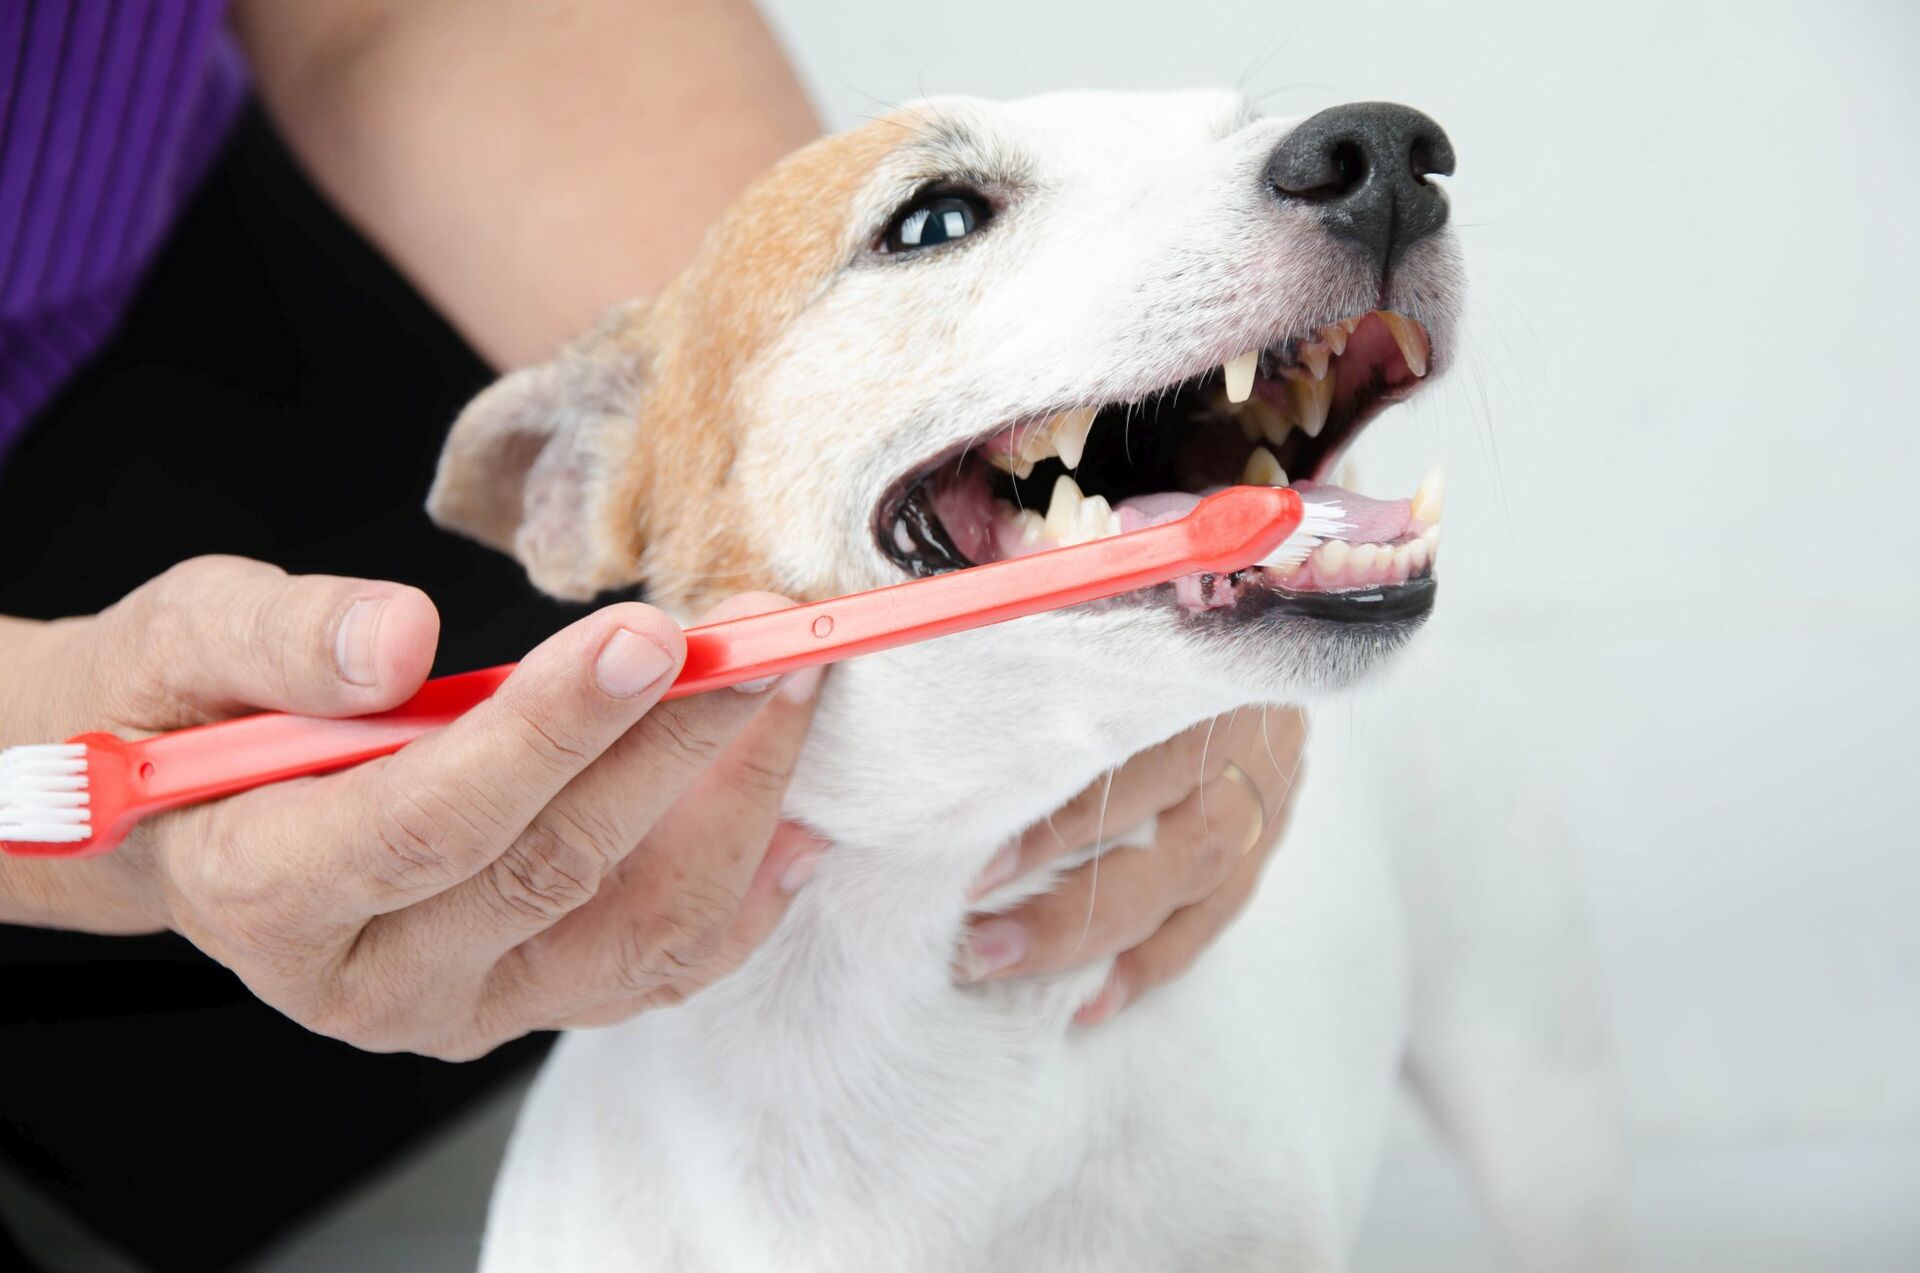 Zahnpflege beim Hund – so klappt’s